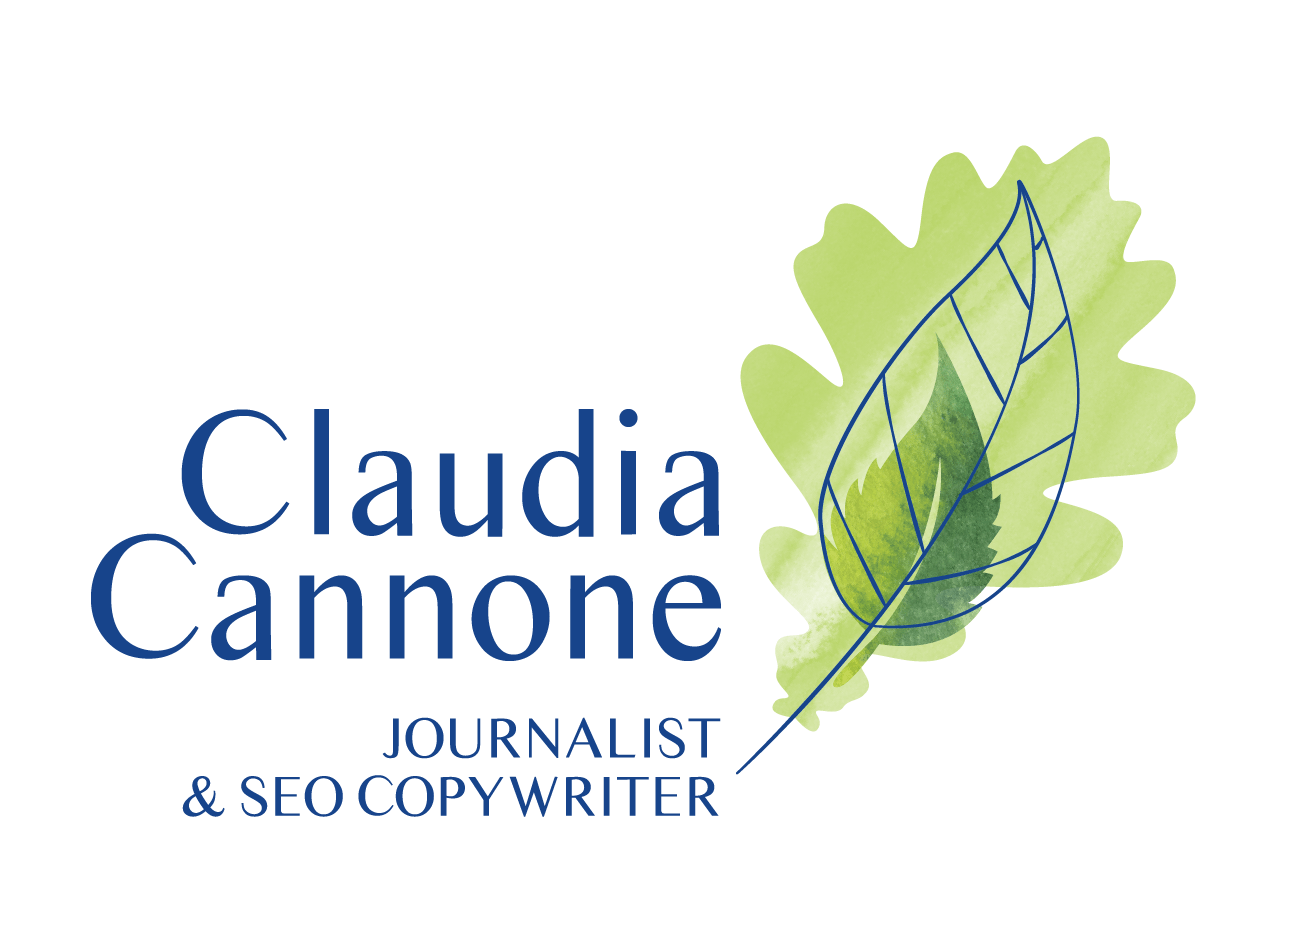 Claudia Cannone